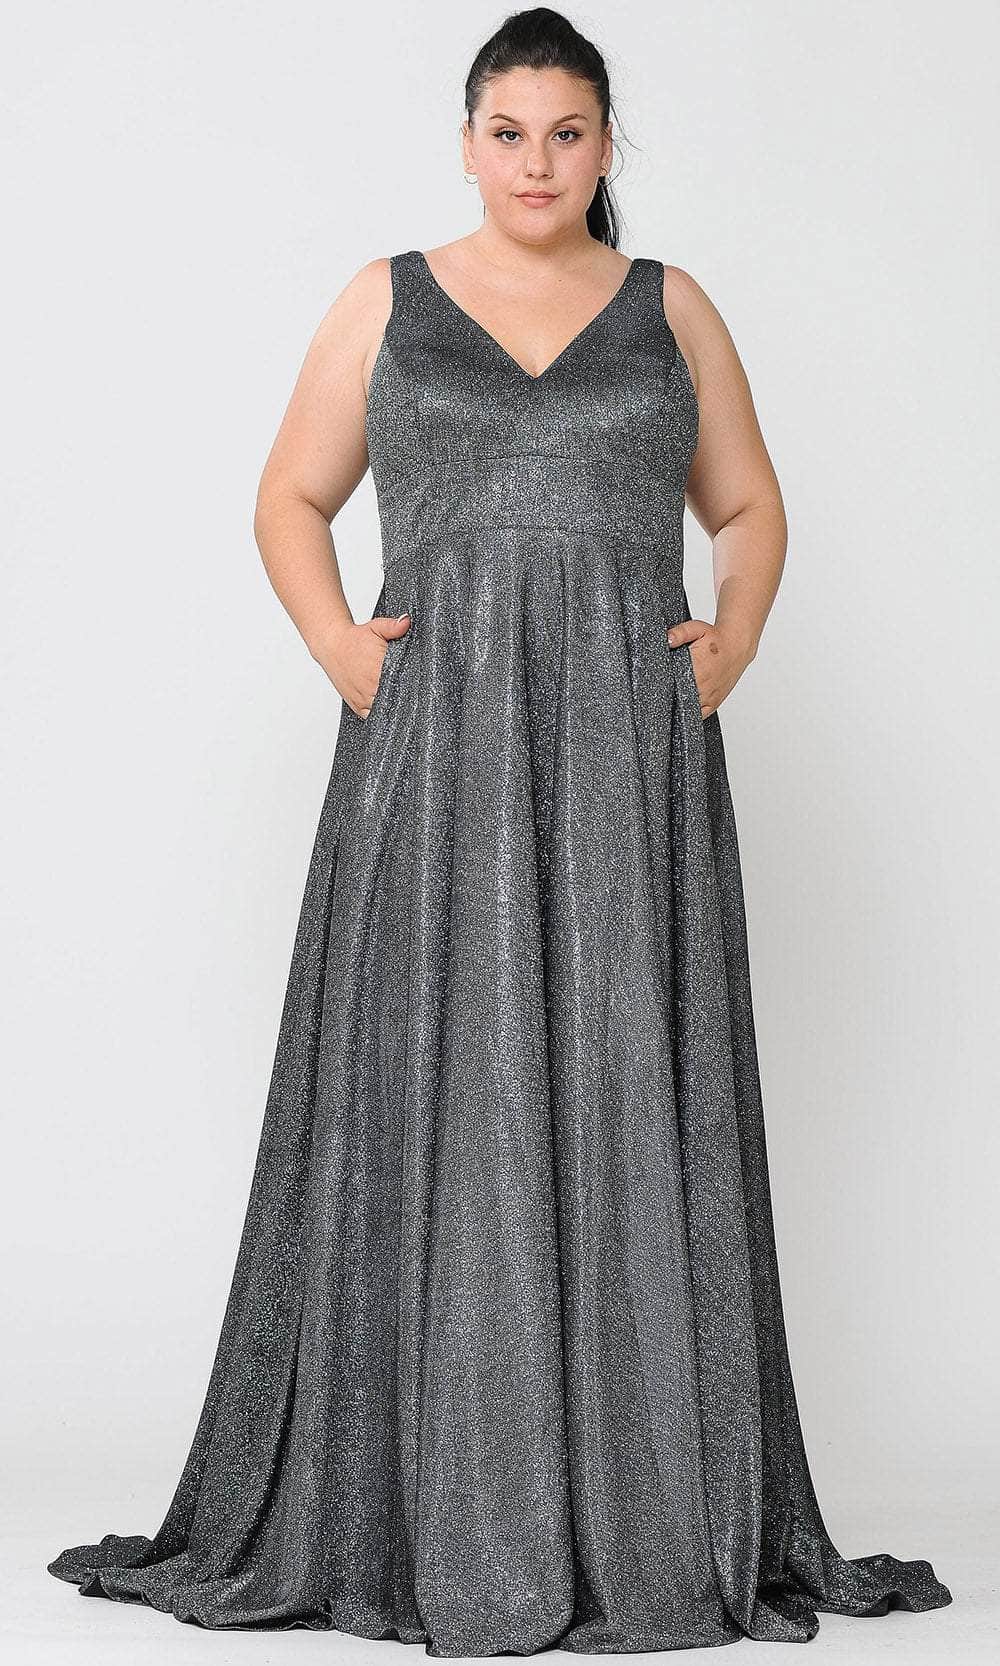 Image of Poly USA W1036 - Plunging Neckline Metallic Glittered Dress